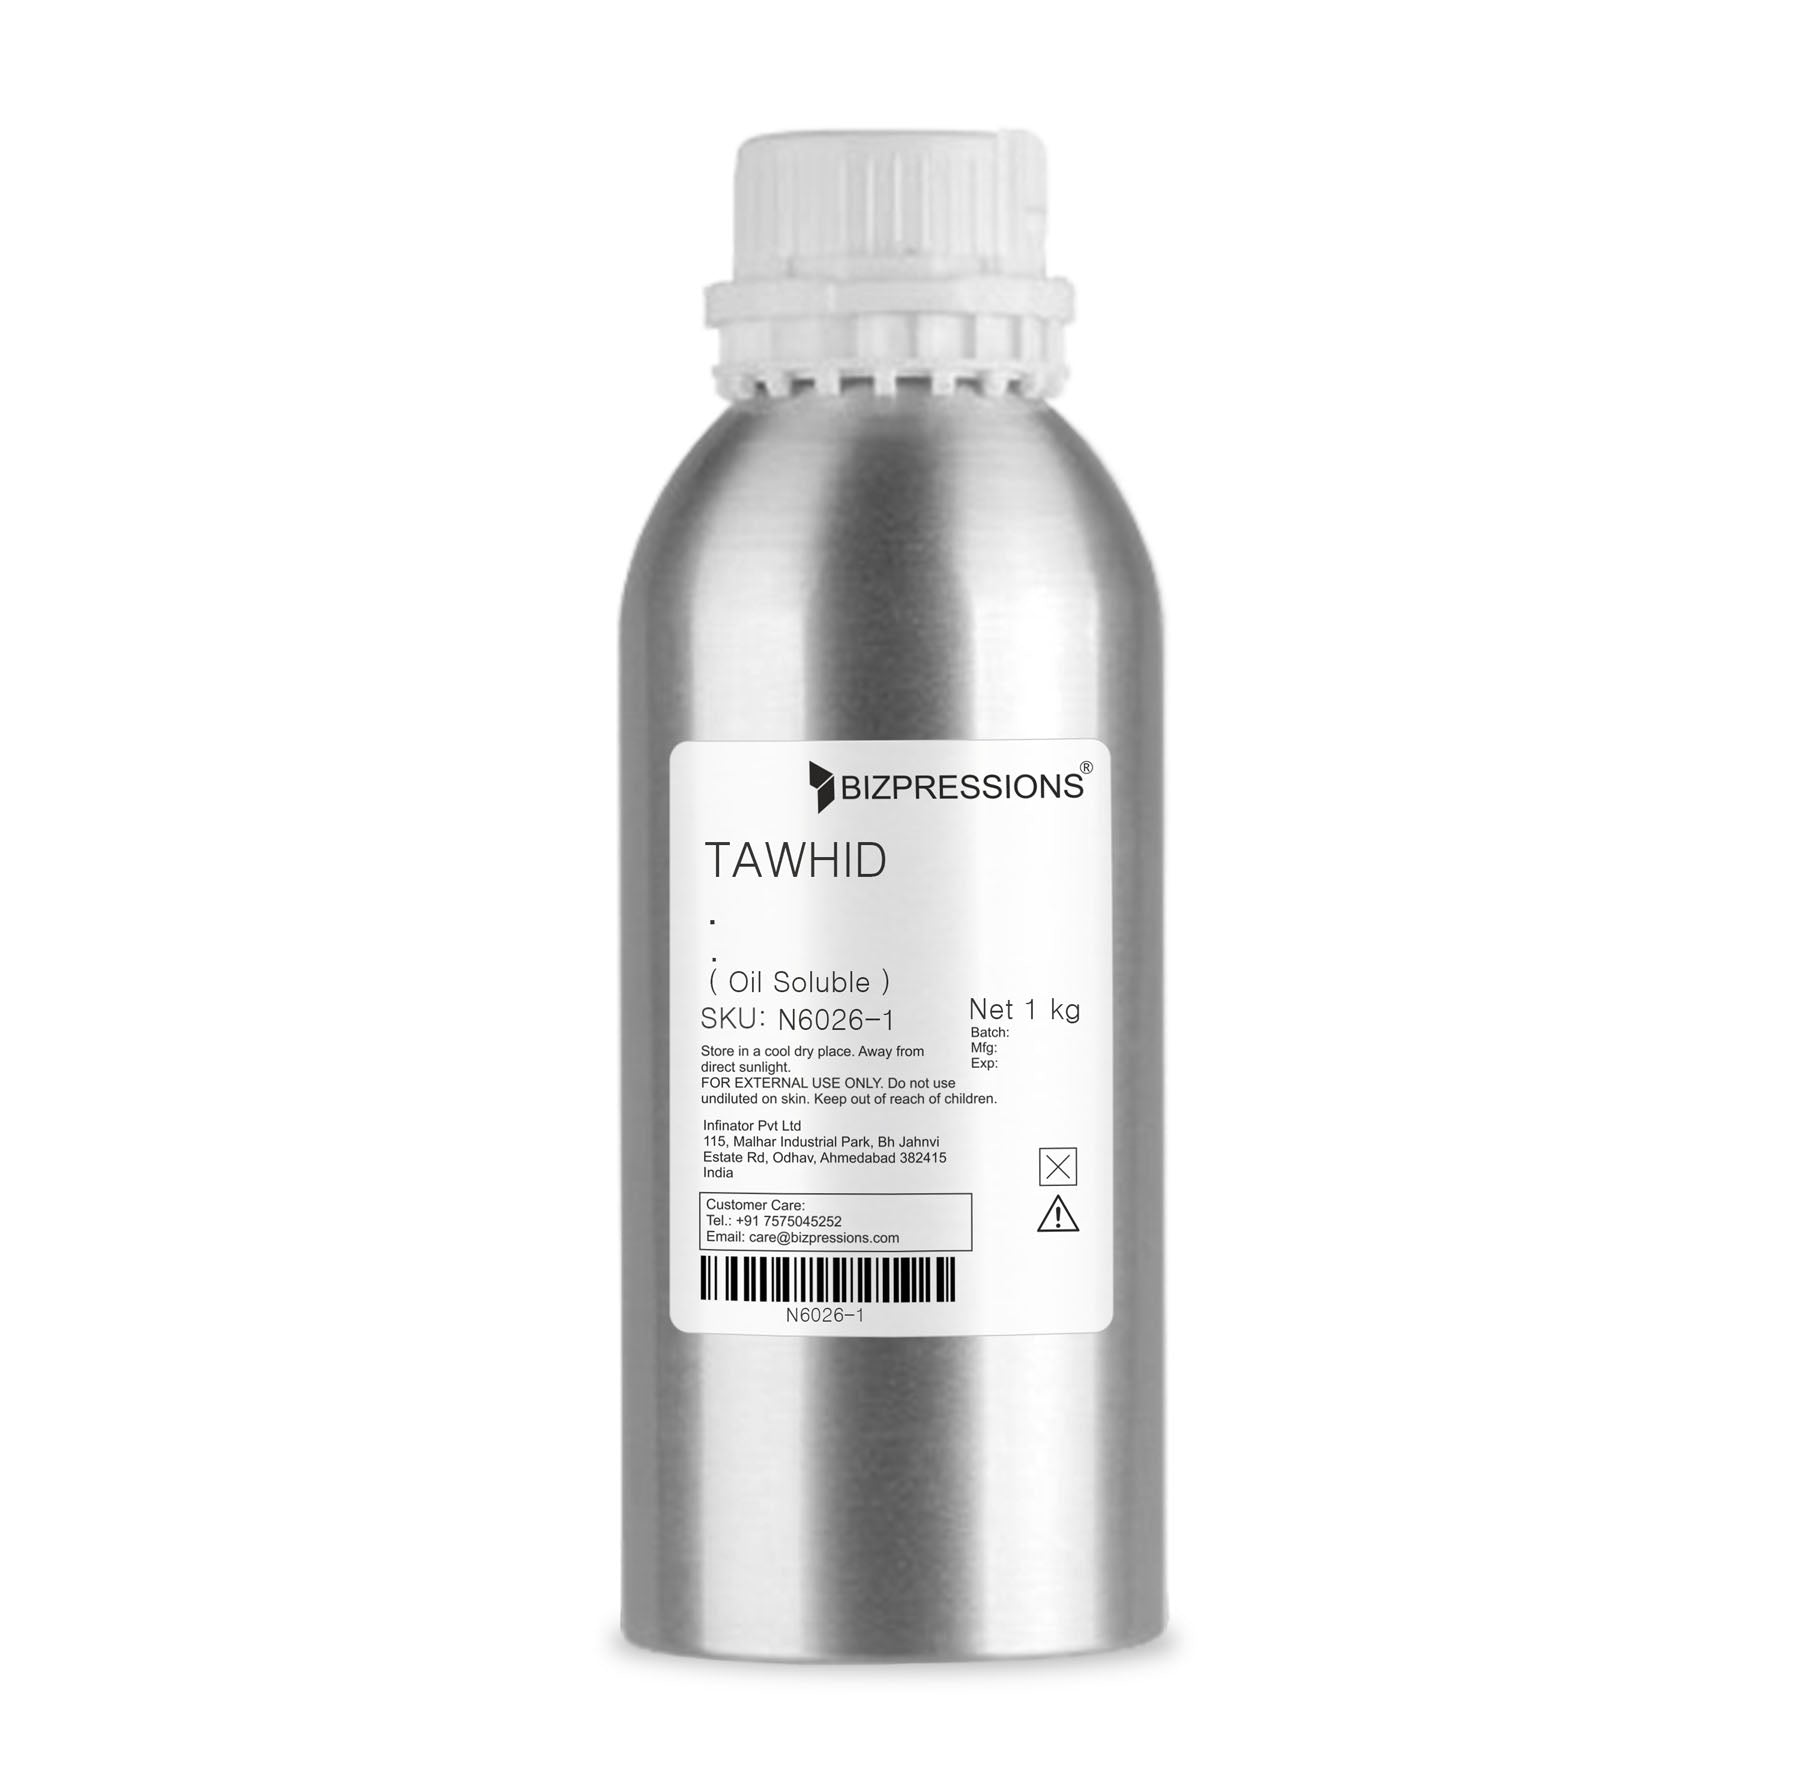 TAWHID - Fragrance ( Oil Soluble ) - 1 kg